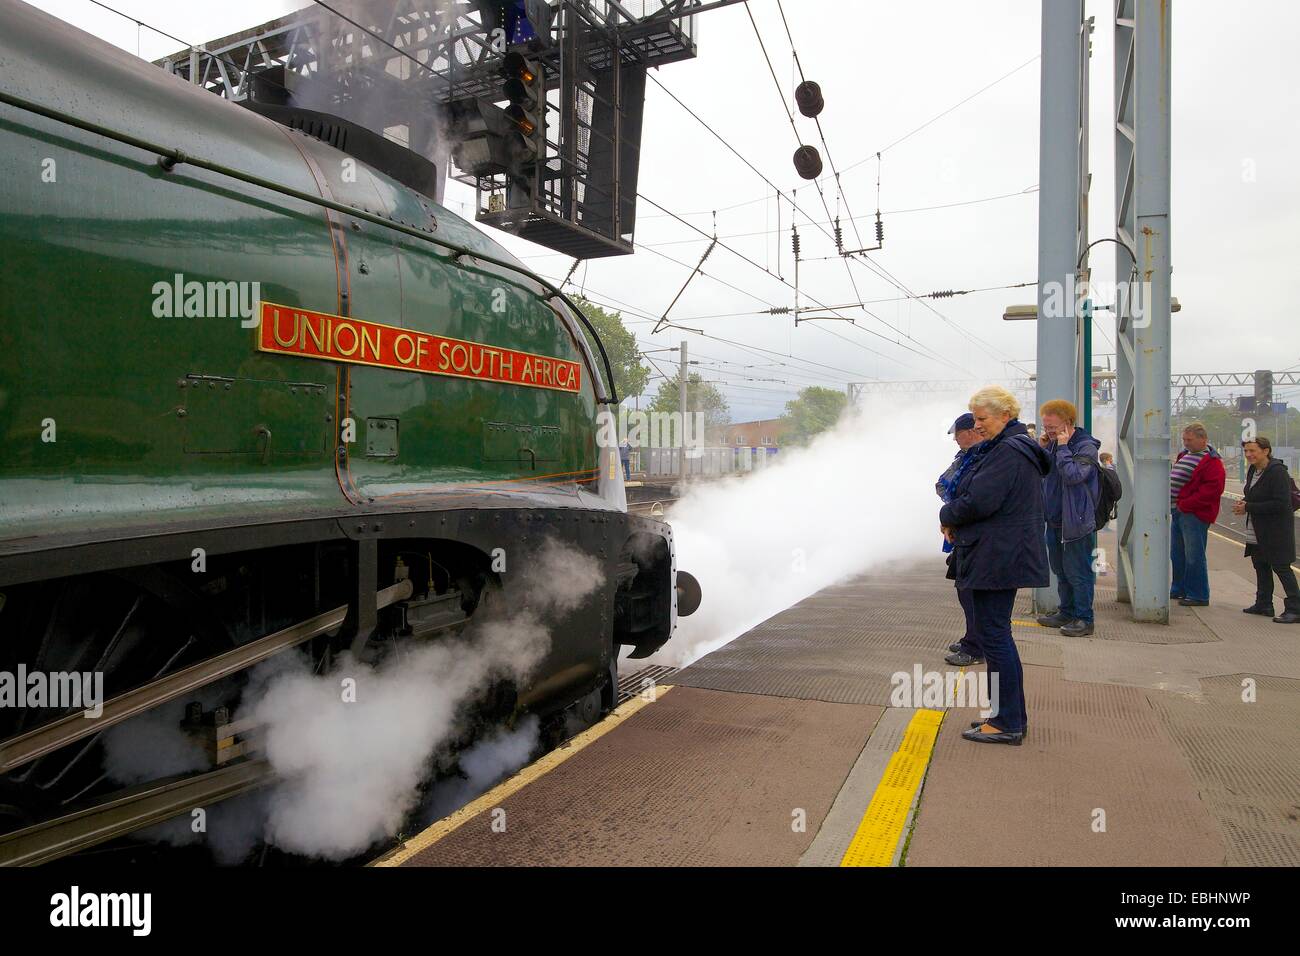 Trainspoters by Union of South Africa sream train. Carlisle Railway Station Carlisle Cumbria England UK Stock Photo